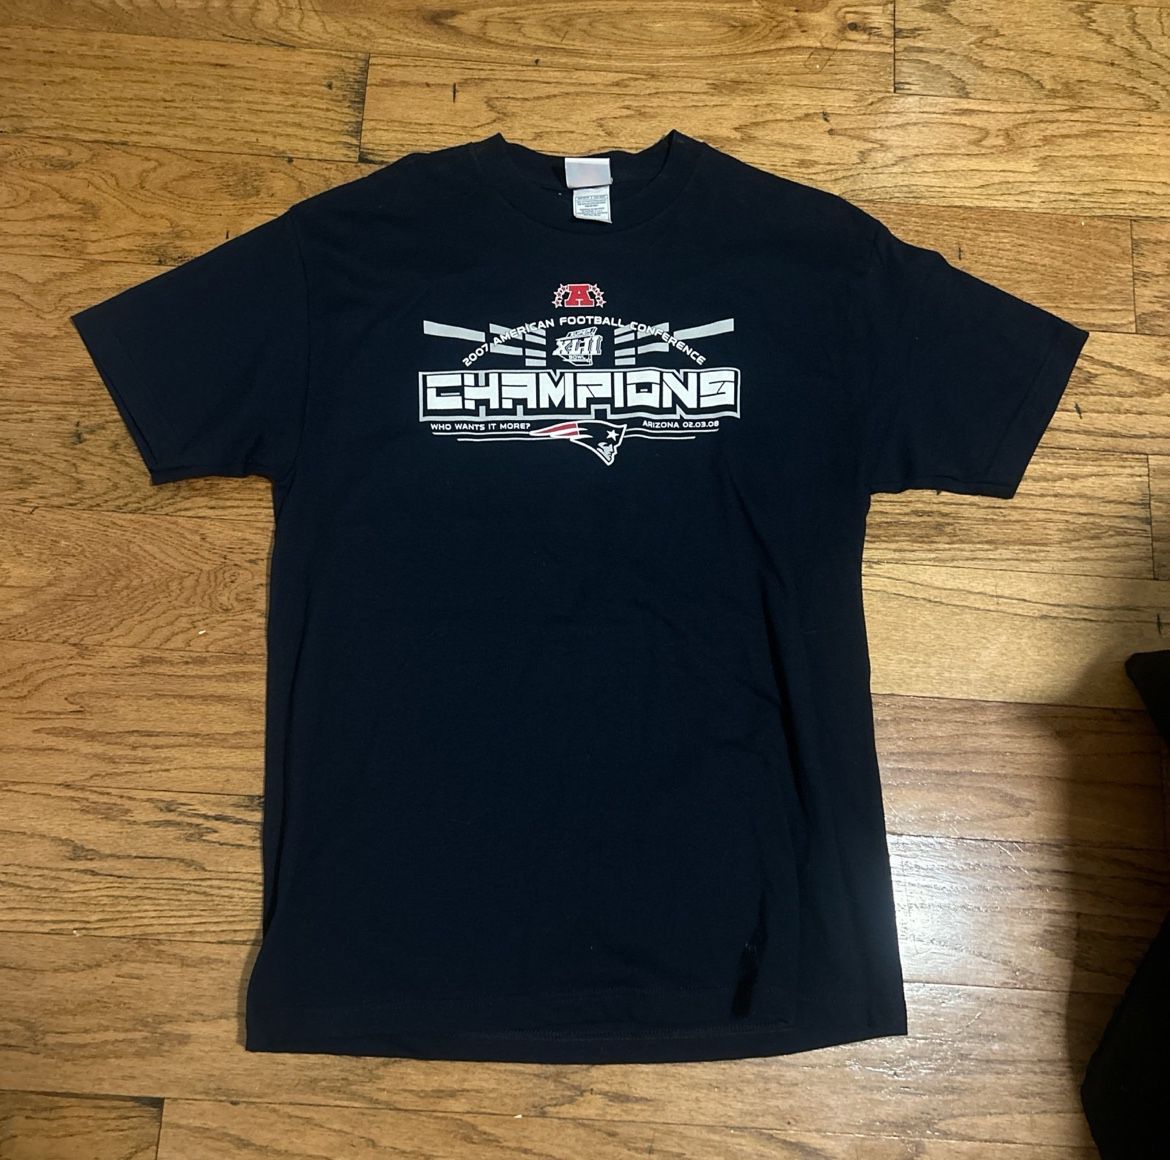 2007 AFC Champions New England Patriots Shirt!